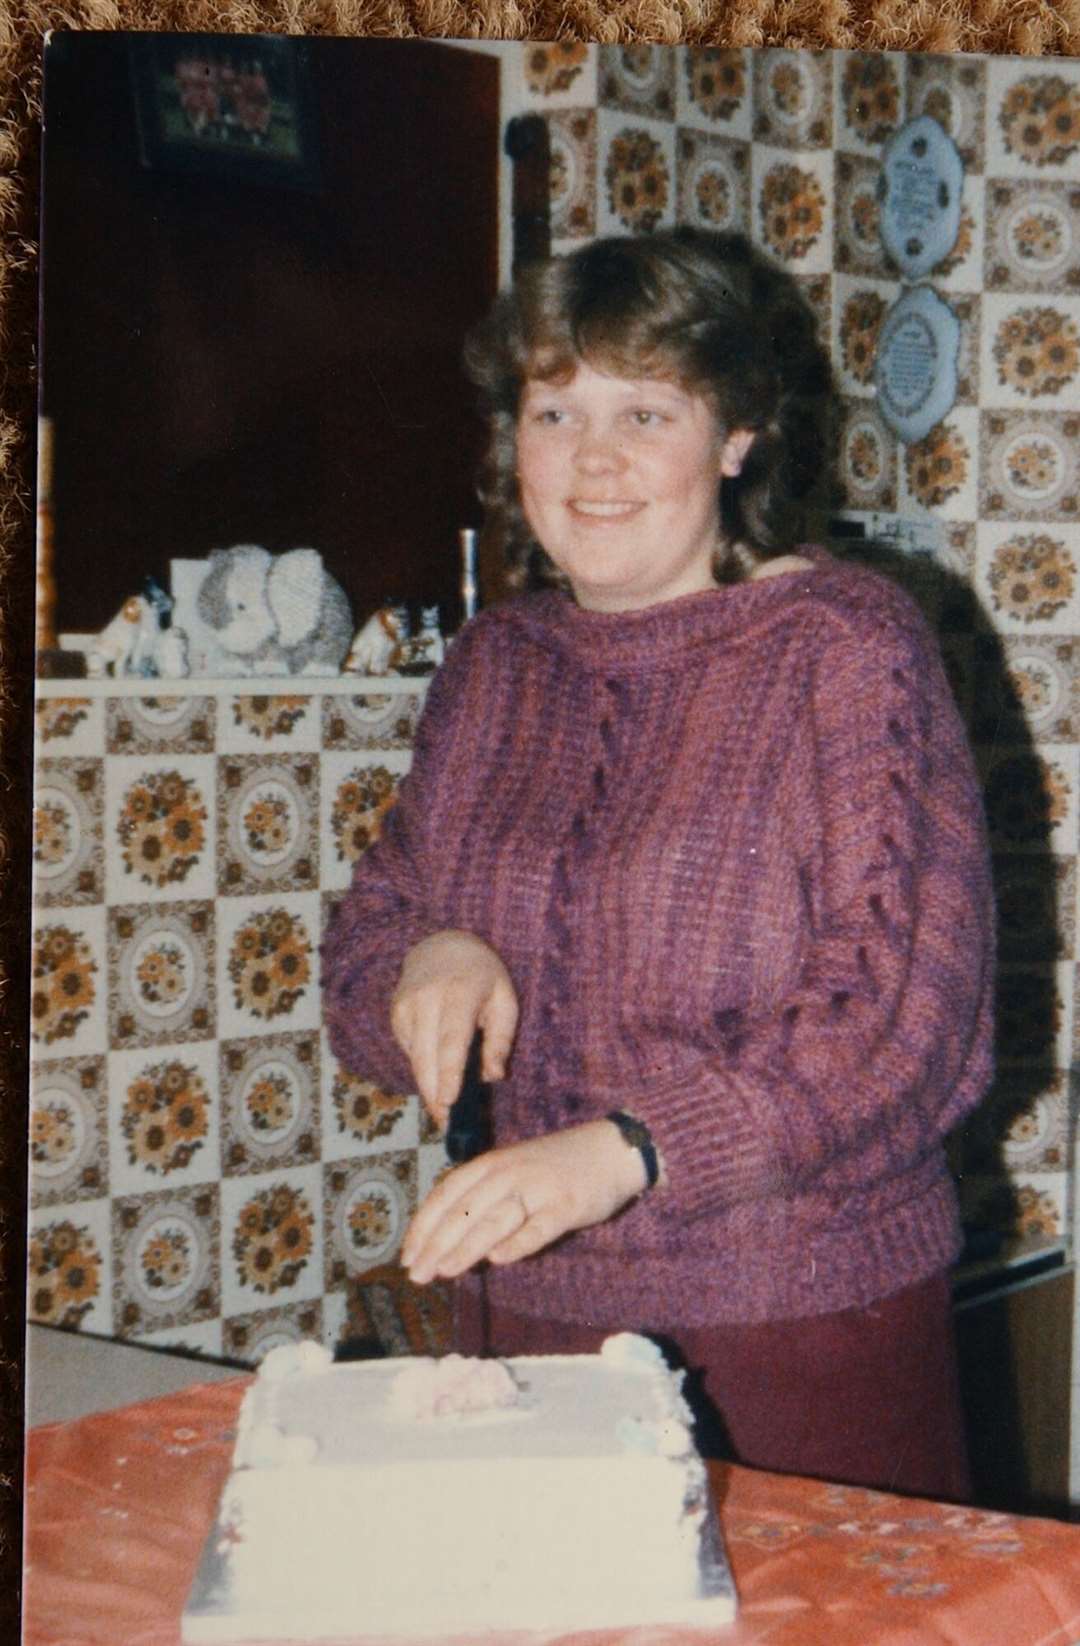 Debbie Griggs - missing for 20 years.